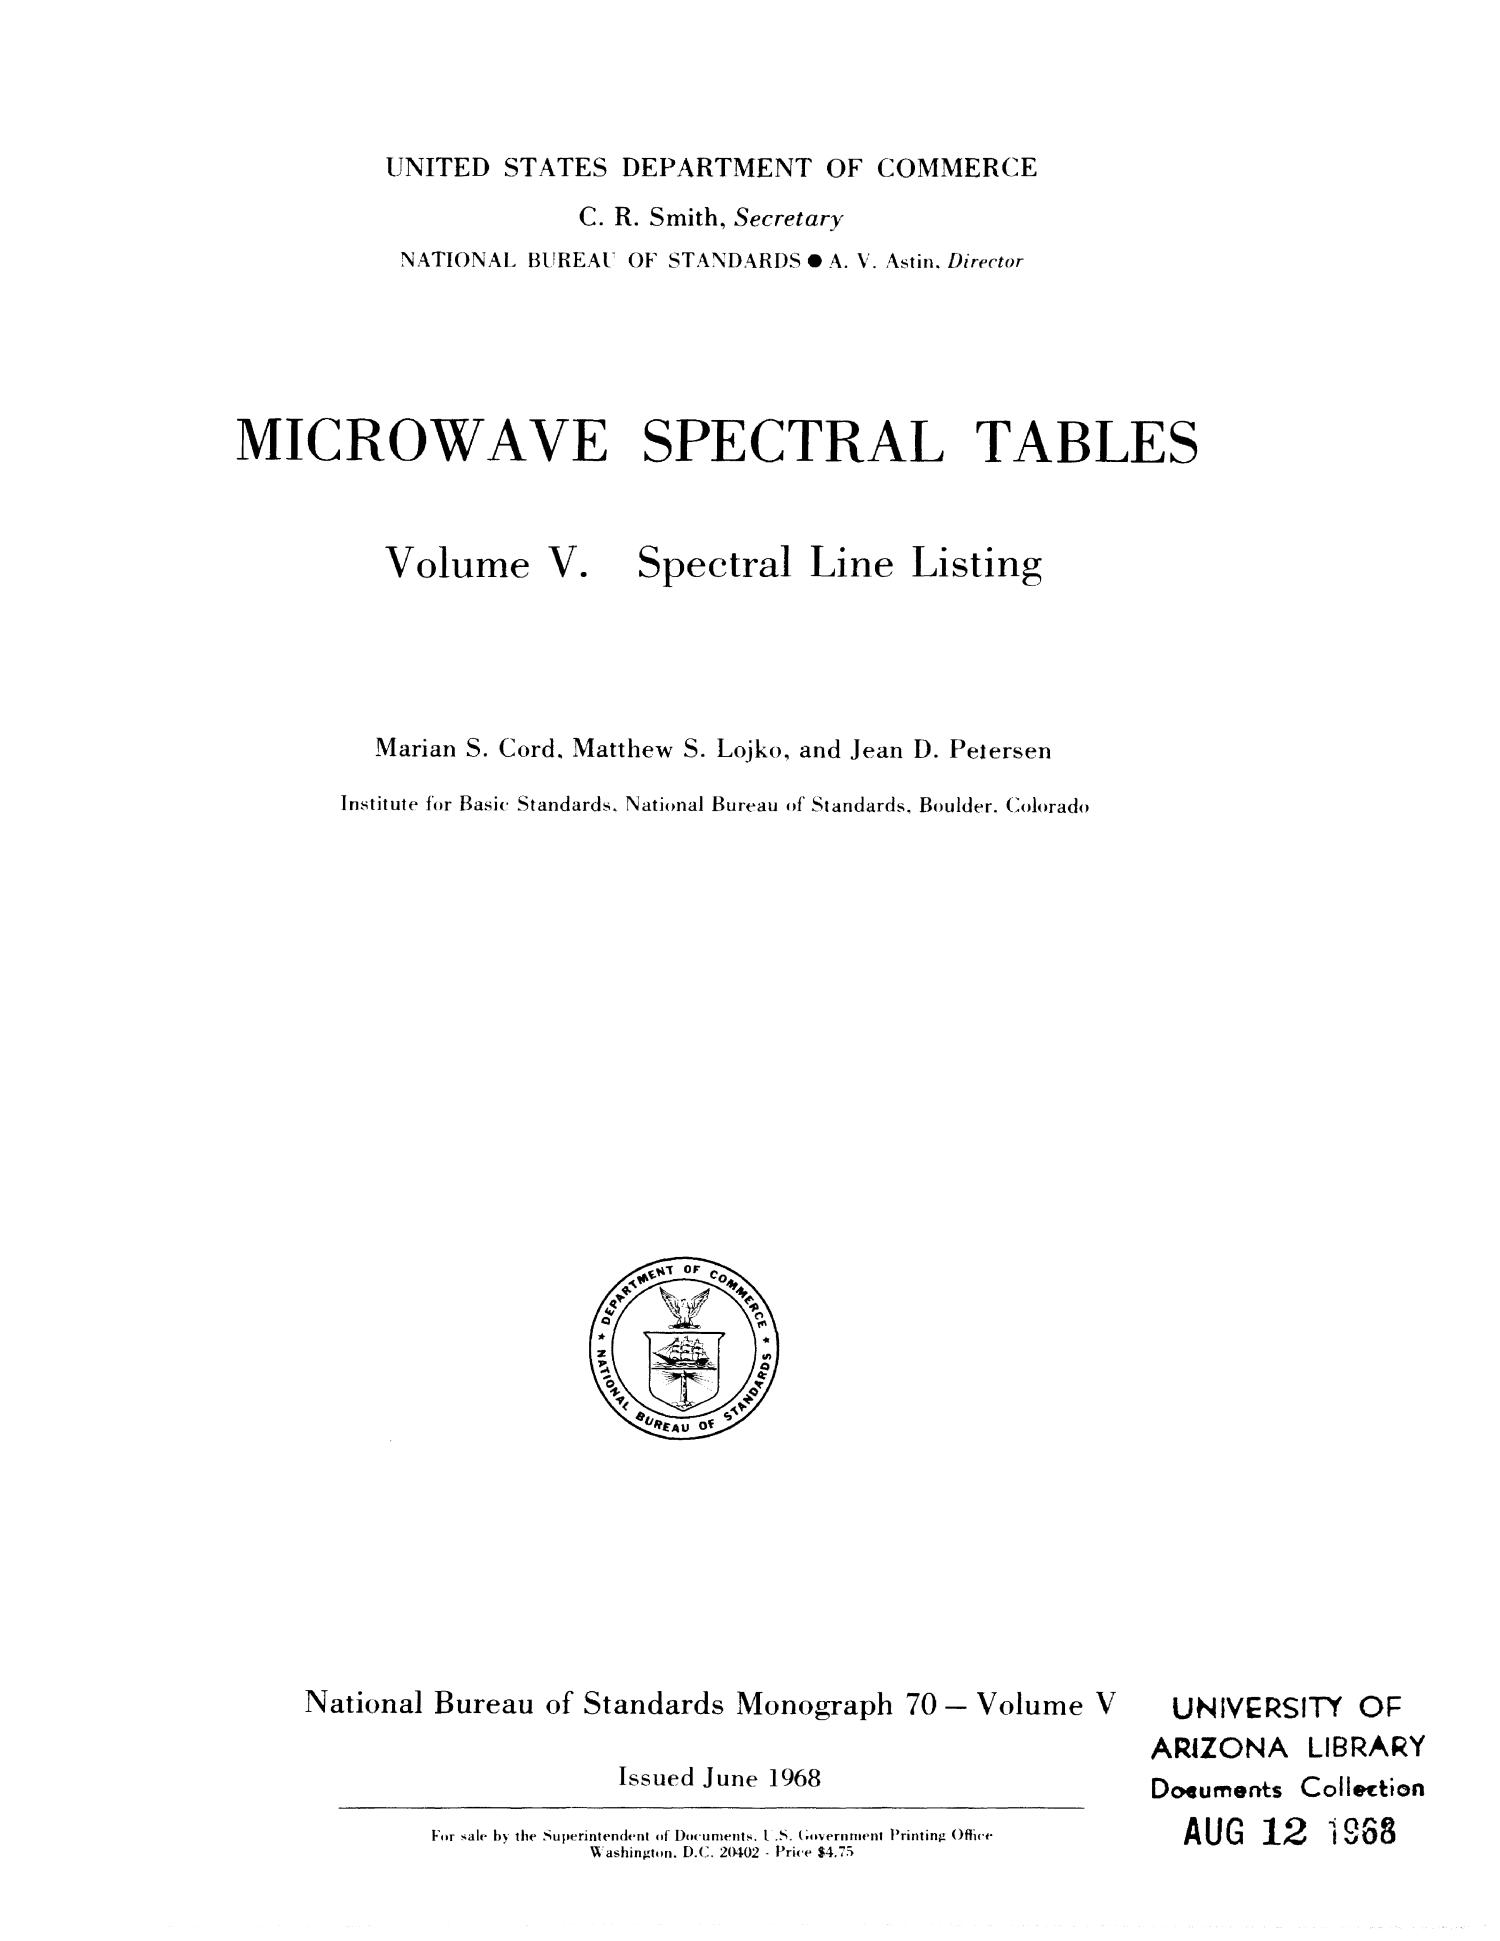 Microwave Spectral Tables: Volume 5. Spectral Line Listing
                                                
                                                    i
                                                